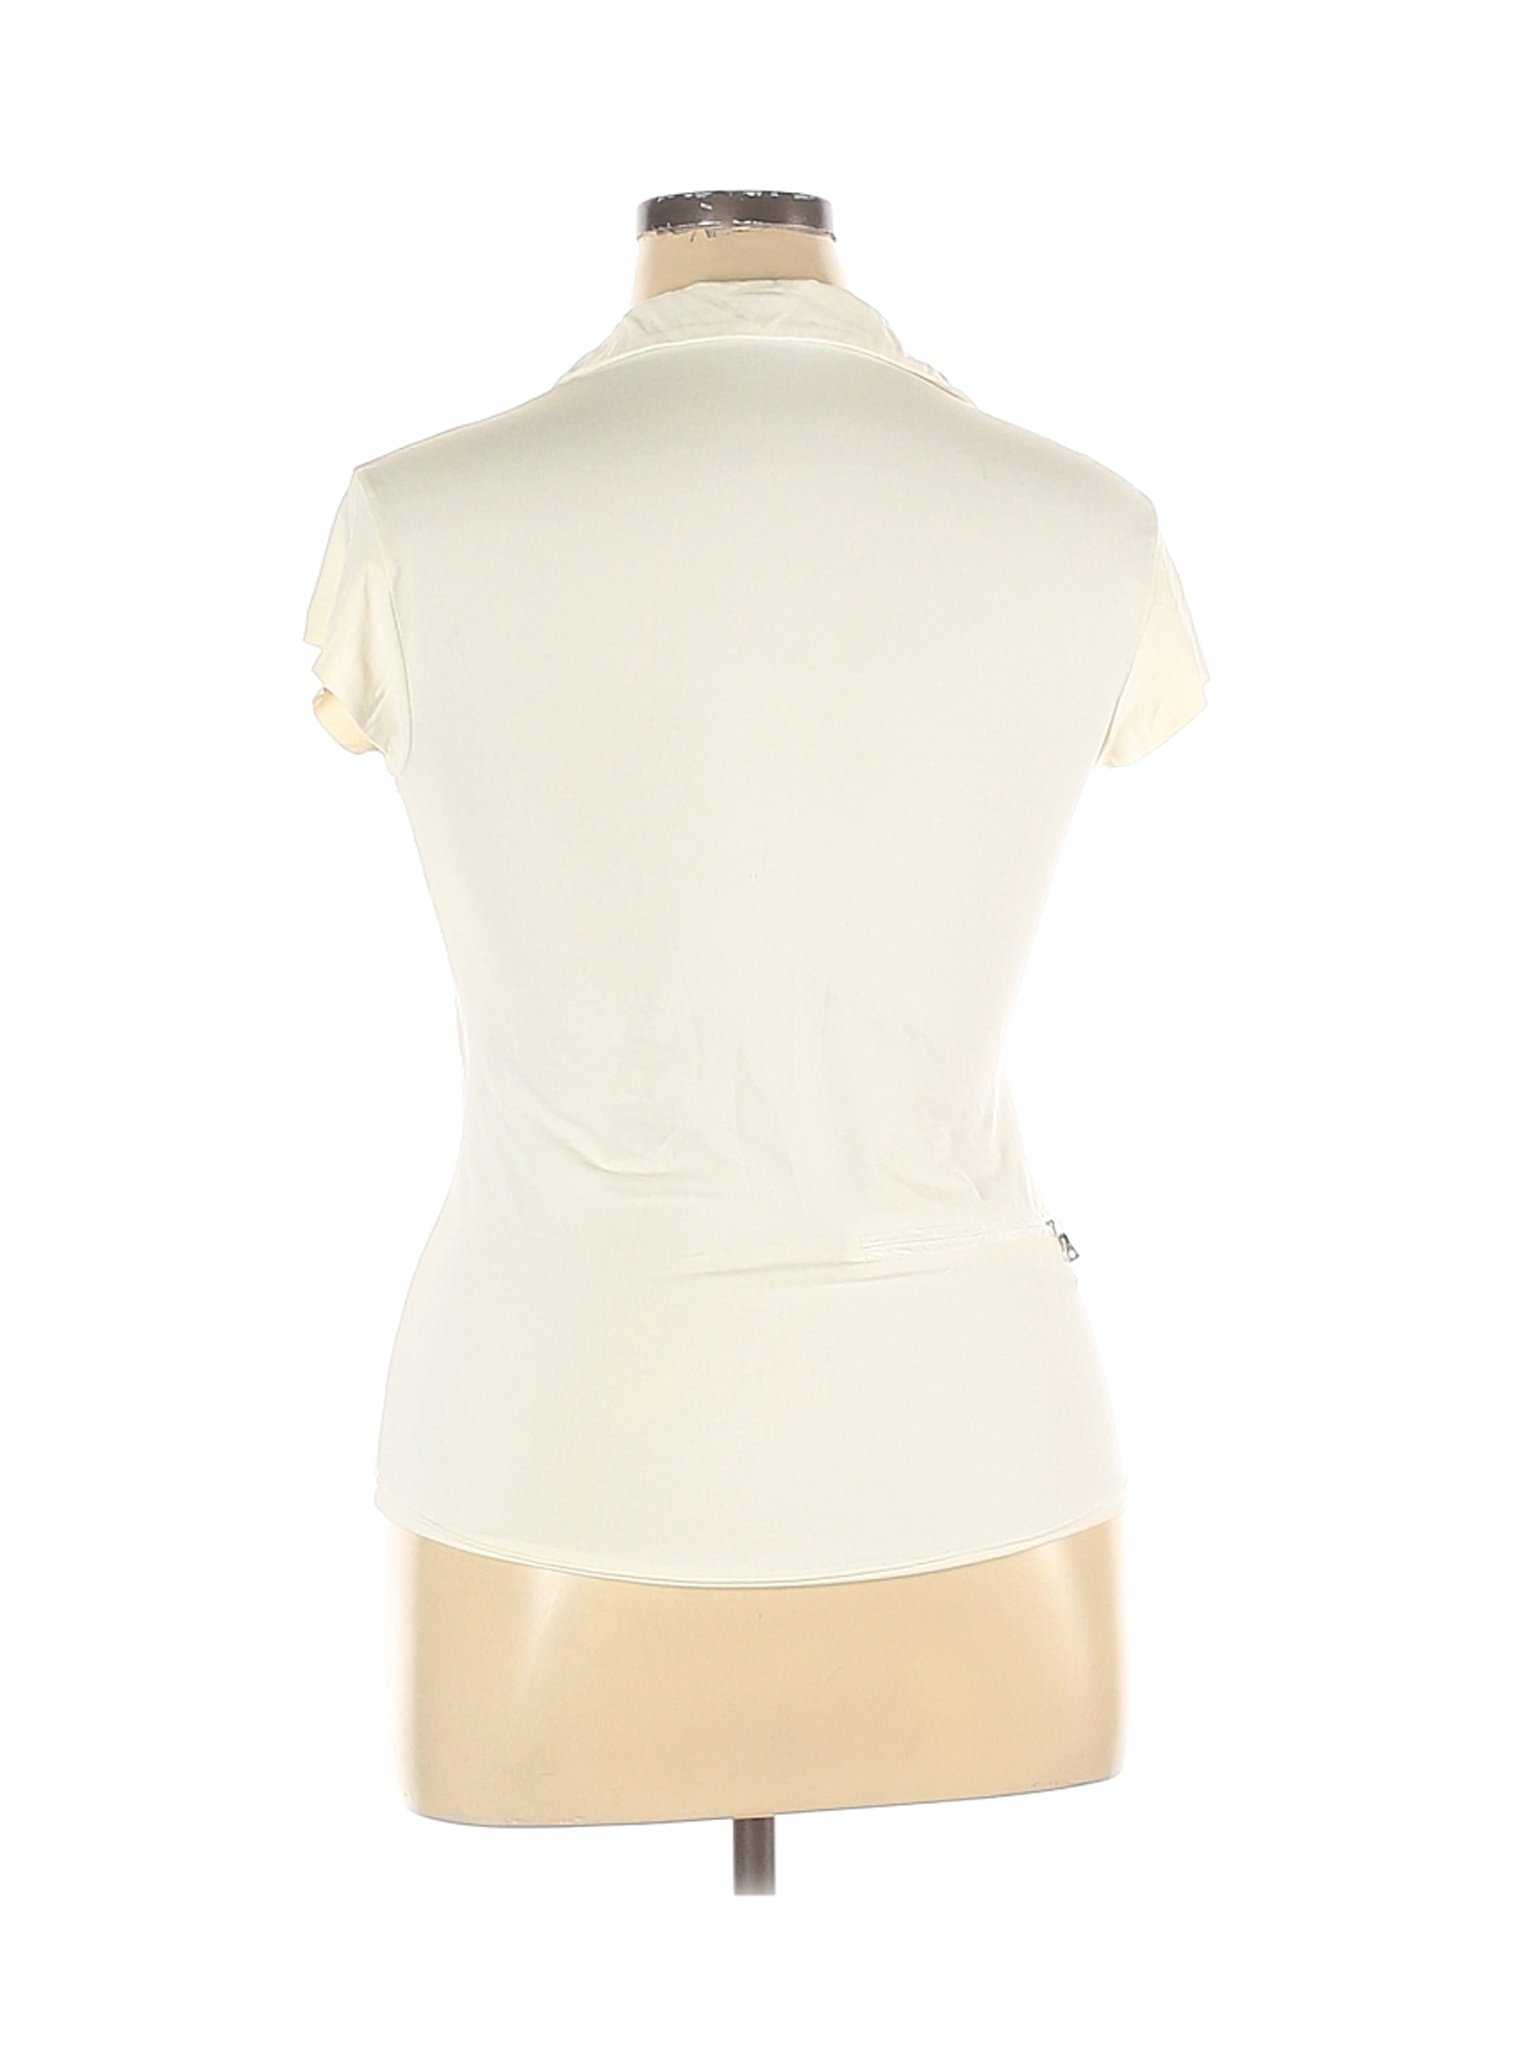 Unbranded Women Ivory Short Sleeve Polo XL | eBay